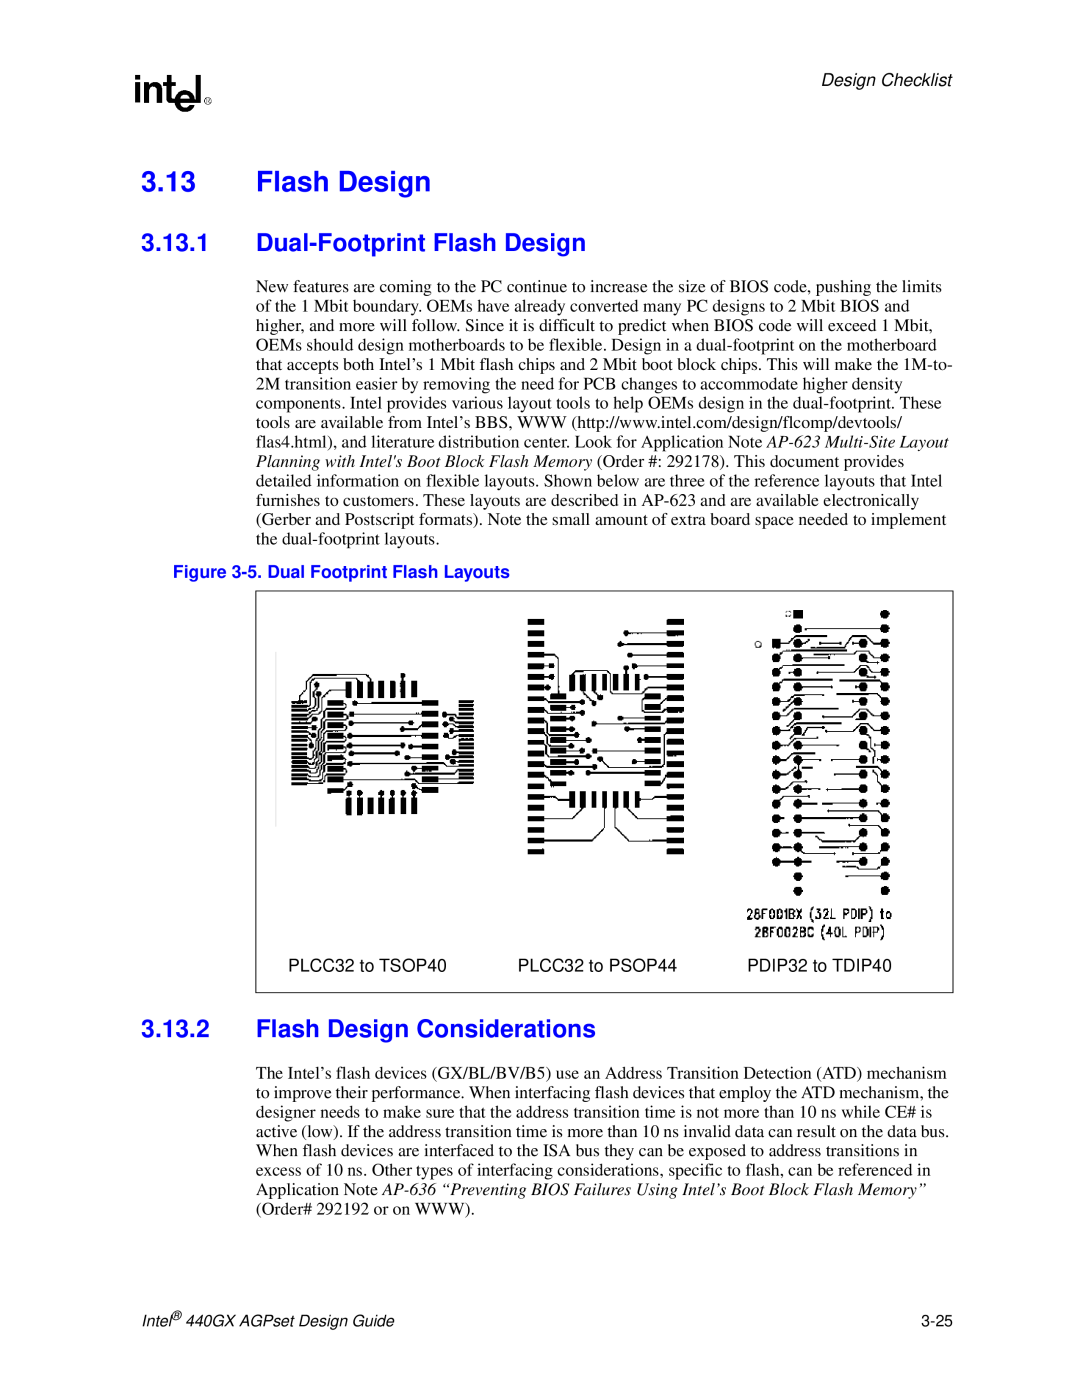 Intel 440GX manual Dual-Footprint Flash Design, Flash Design Considerations, 5. Dual Footprint Flash Layouts 